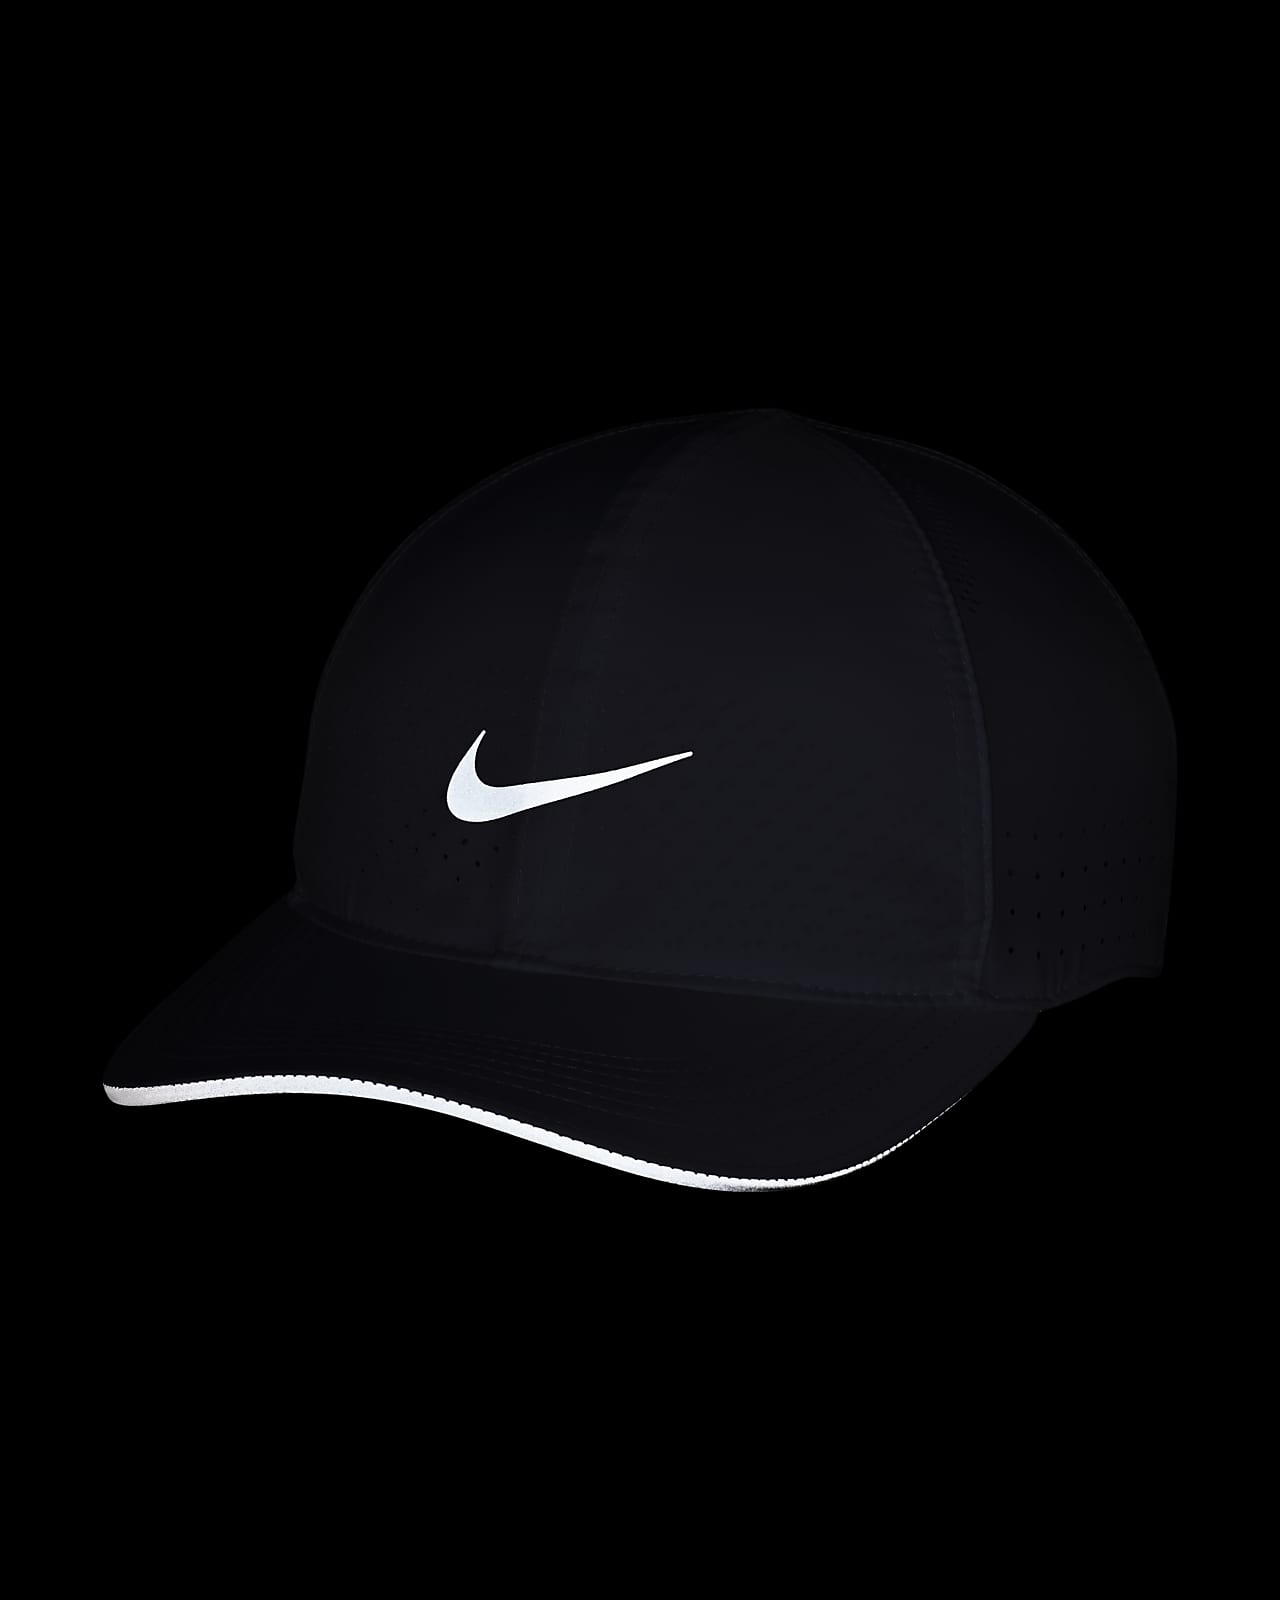 Nike Dri-FIT Aerobill Featherlight Perforated Running Cap. Nike.com